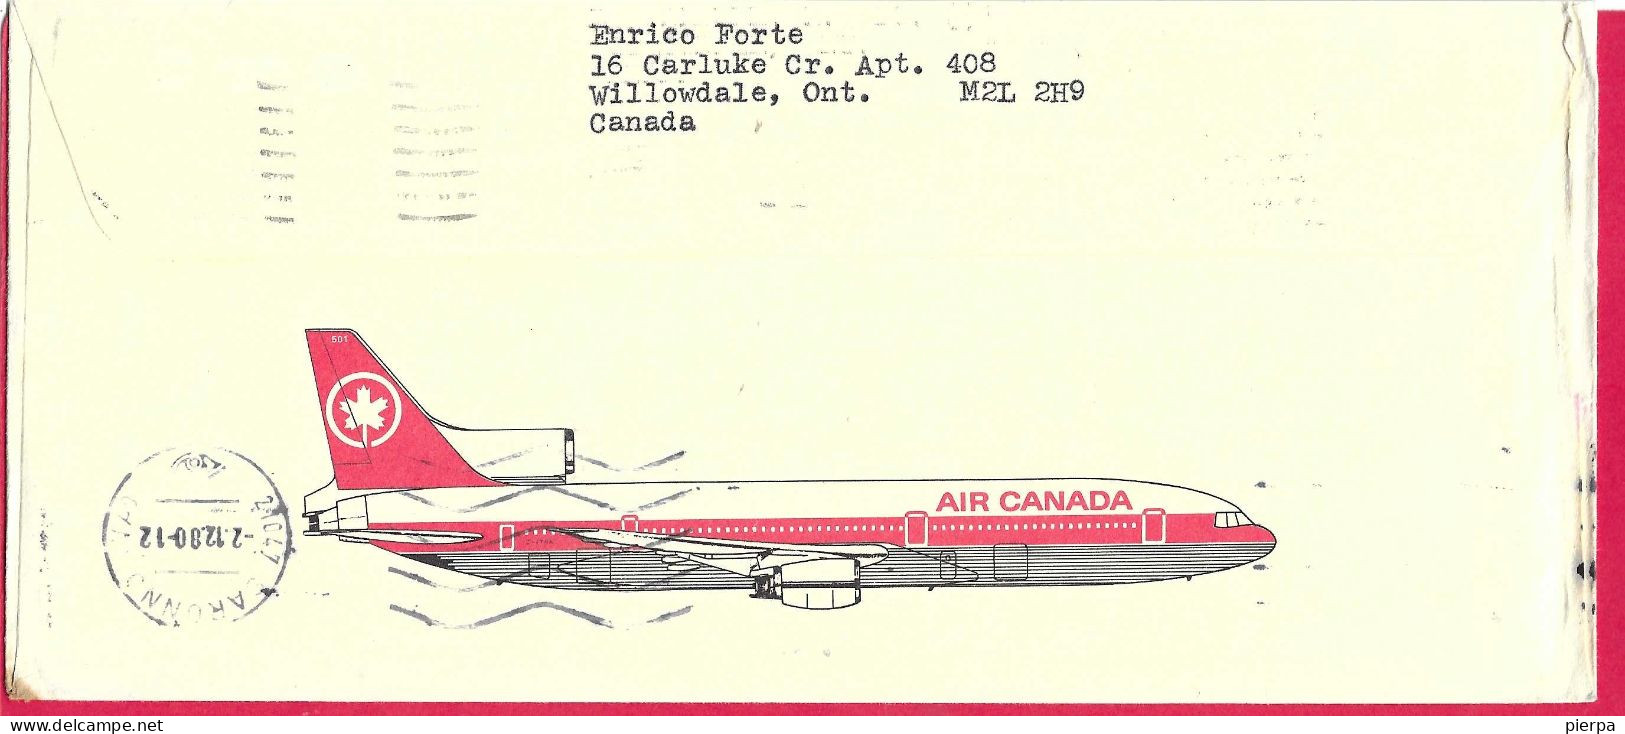 CANADA - BUSTA INTESTATA AIR CANADA - ANNULLO " POSTES CANADA POST*24.XI. 1980" SU BUSTA COMMERCIALE - Airmail